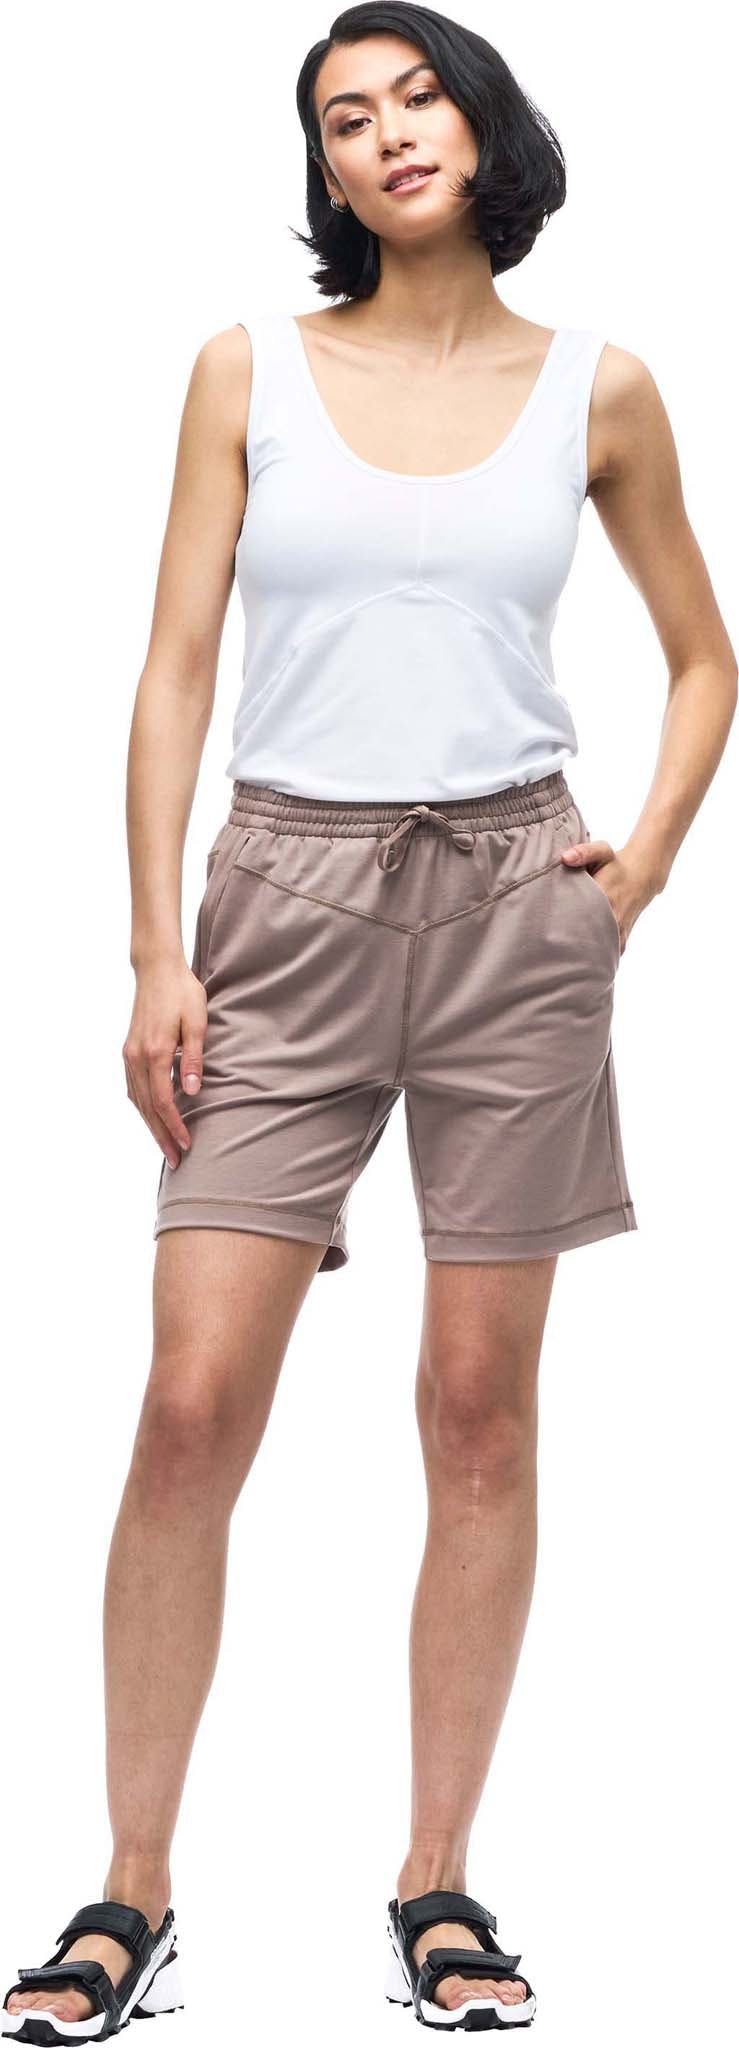 Product image for Bellenger Shorts - Women's